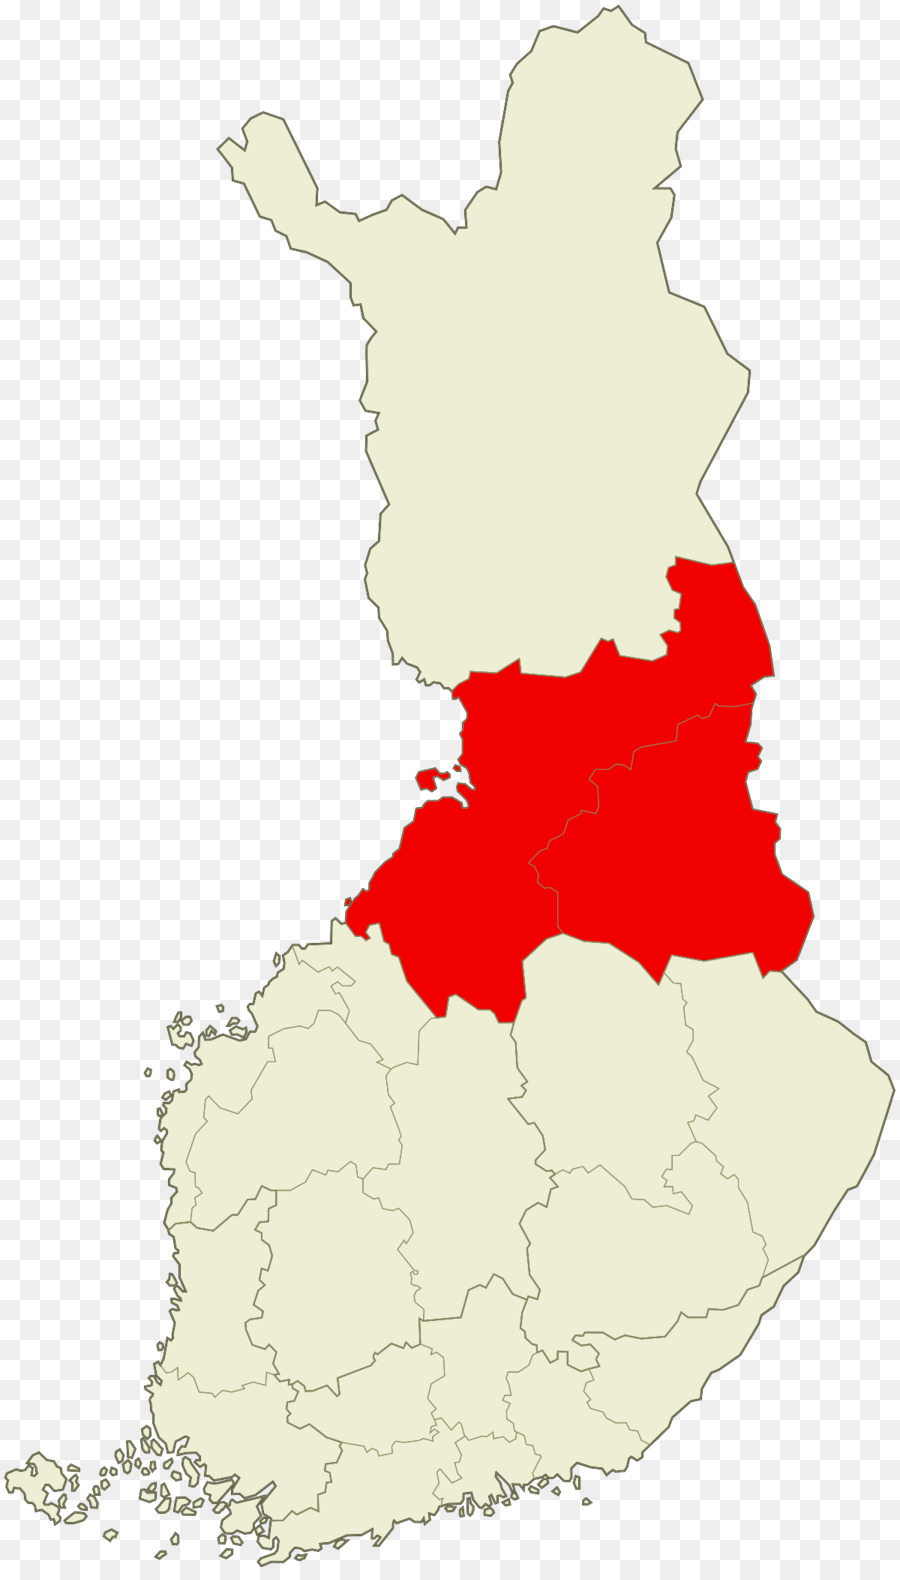 Oulu Trung phần Lan miền Nam Ostrobothnia Tiểu khu của phần Lan - Kainuu